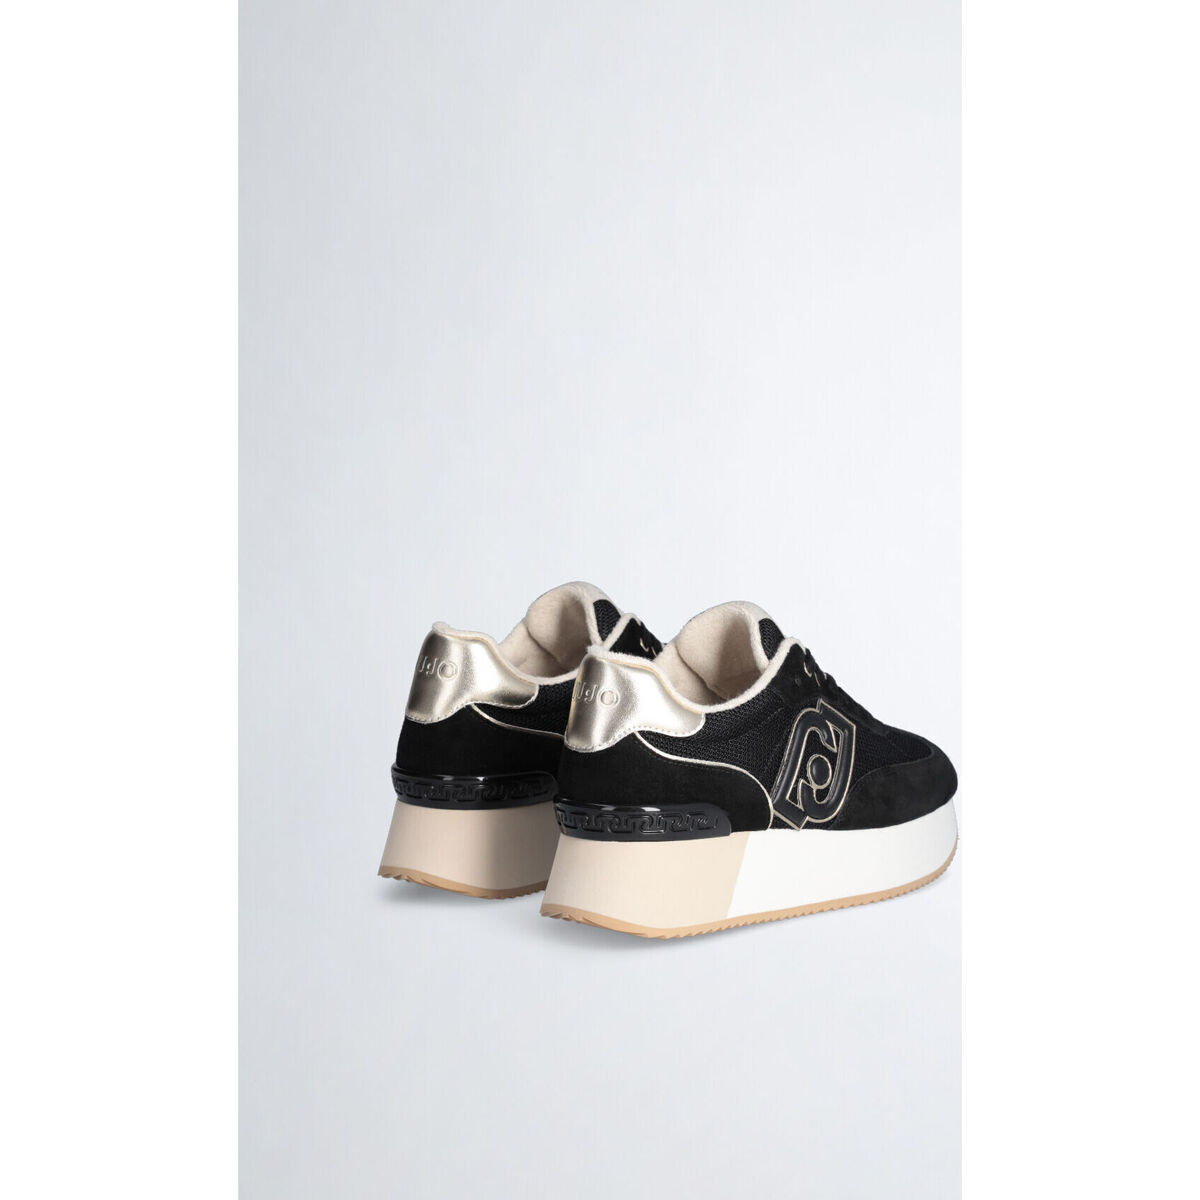 Liu Jo Noir Sneakers plateforme en mesh brillant W221Hrkk